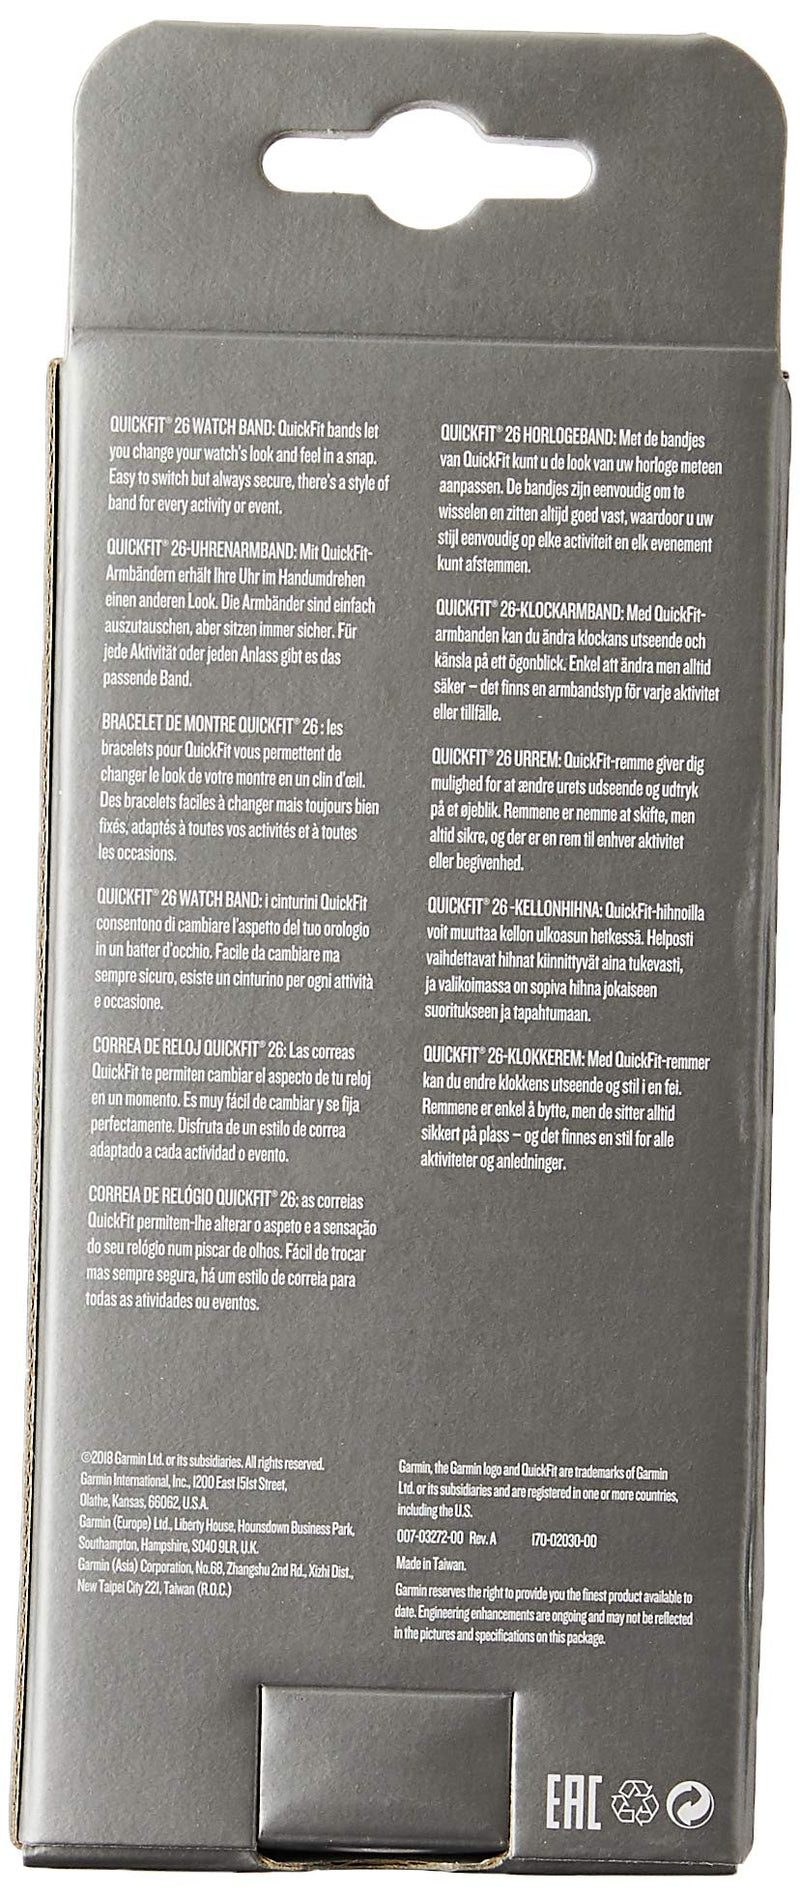 Garmin Quickfit Watch Band 26mm Black Silicone Accessory Band for Fenix 5X Plus/Fenix 5X - LeoForward Australia